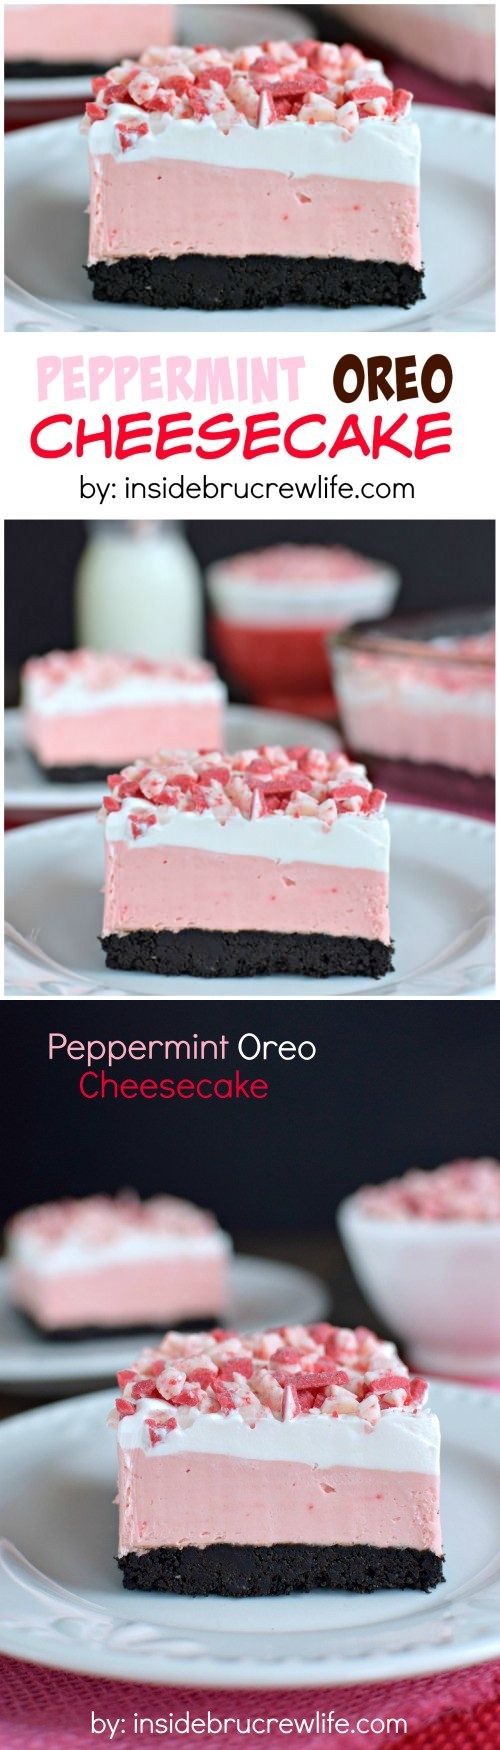 Peppermint Oreo Cheesecake